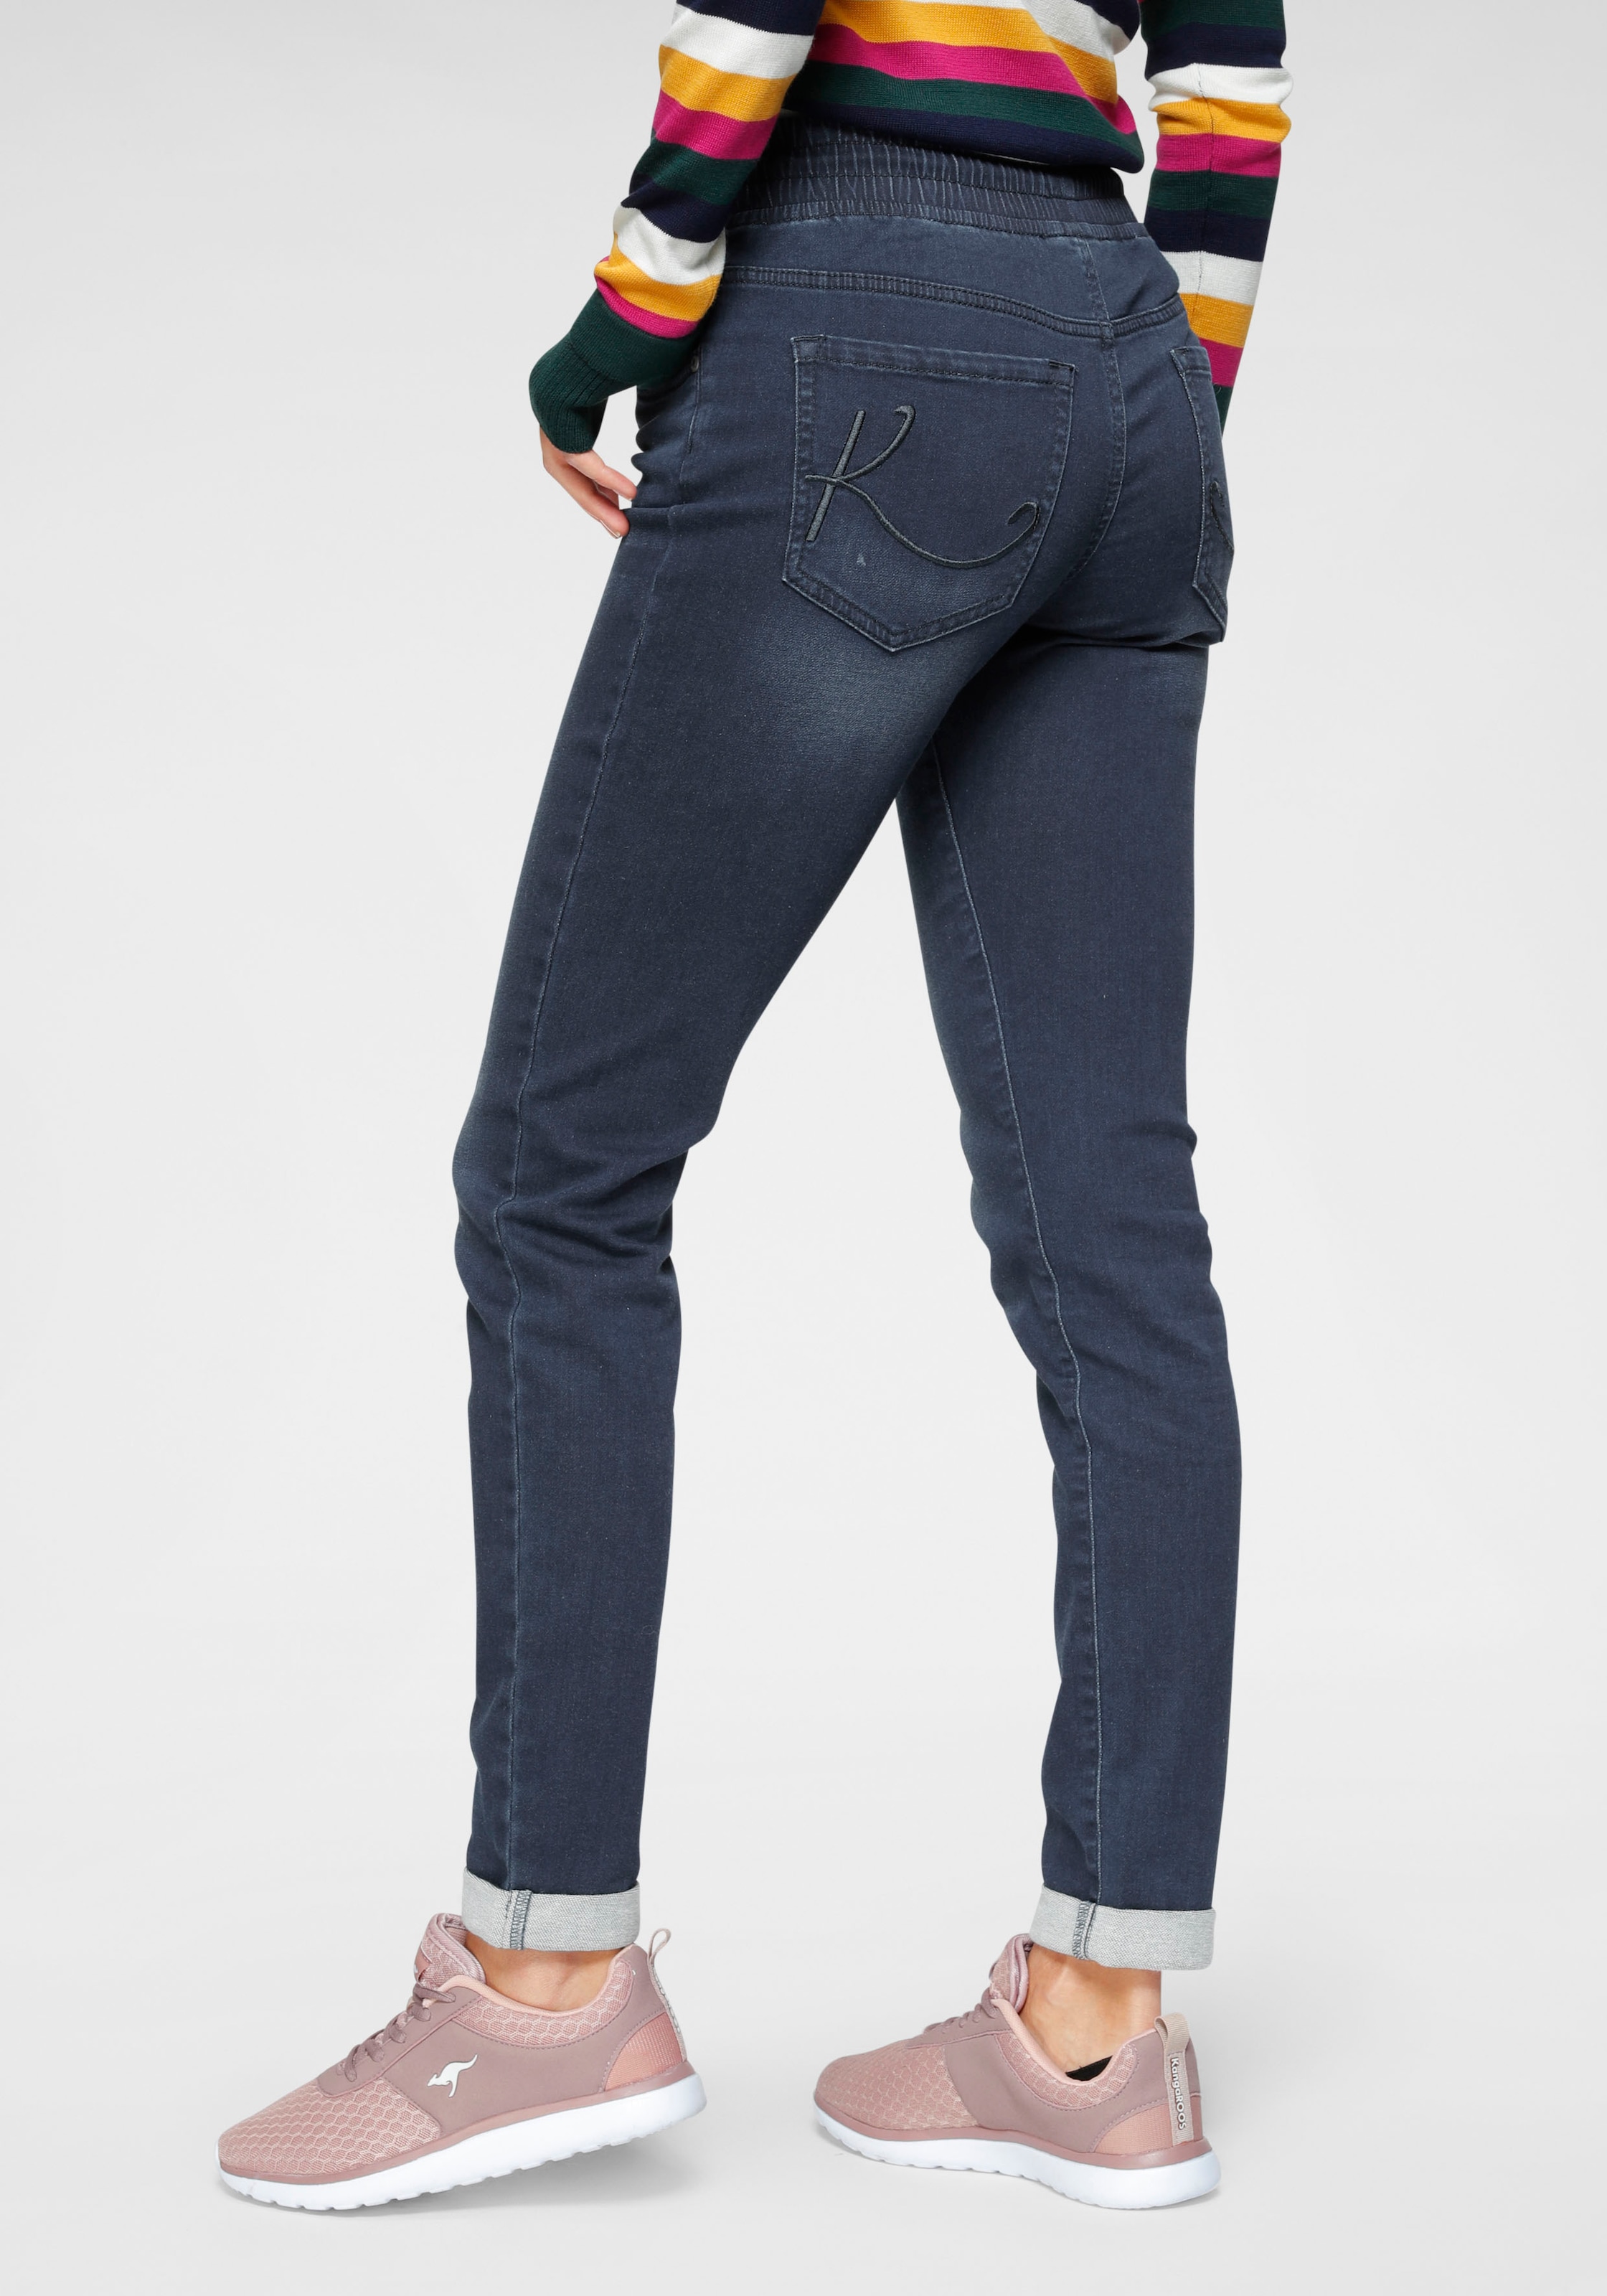 KangaROOS Bequeme Online-Shop im Jeans bestellen